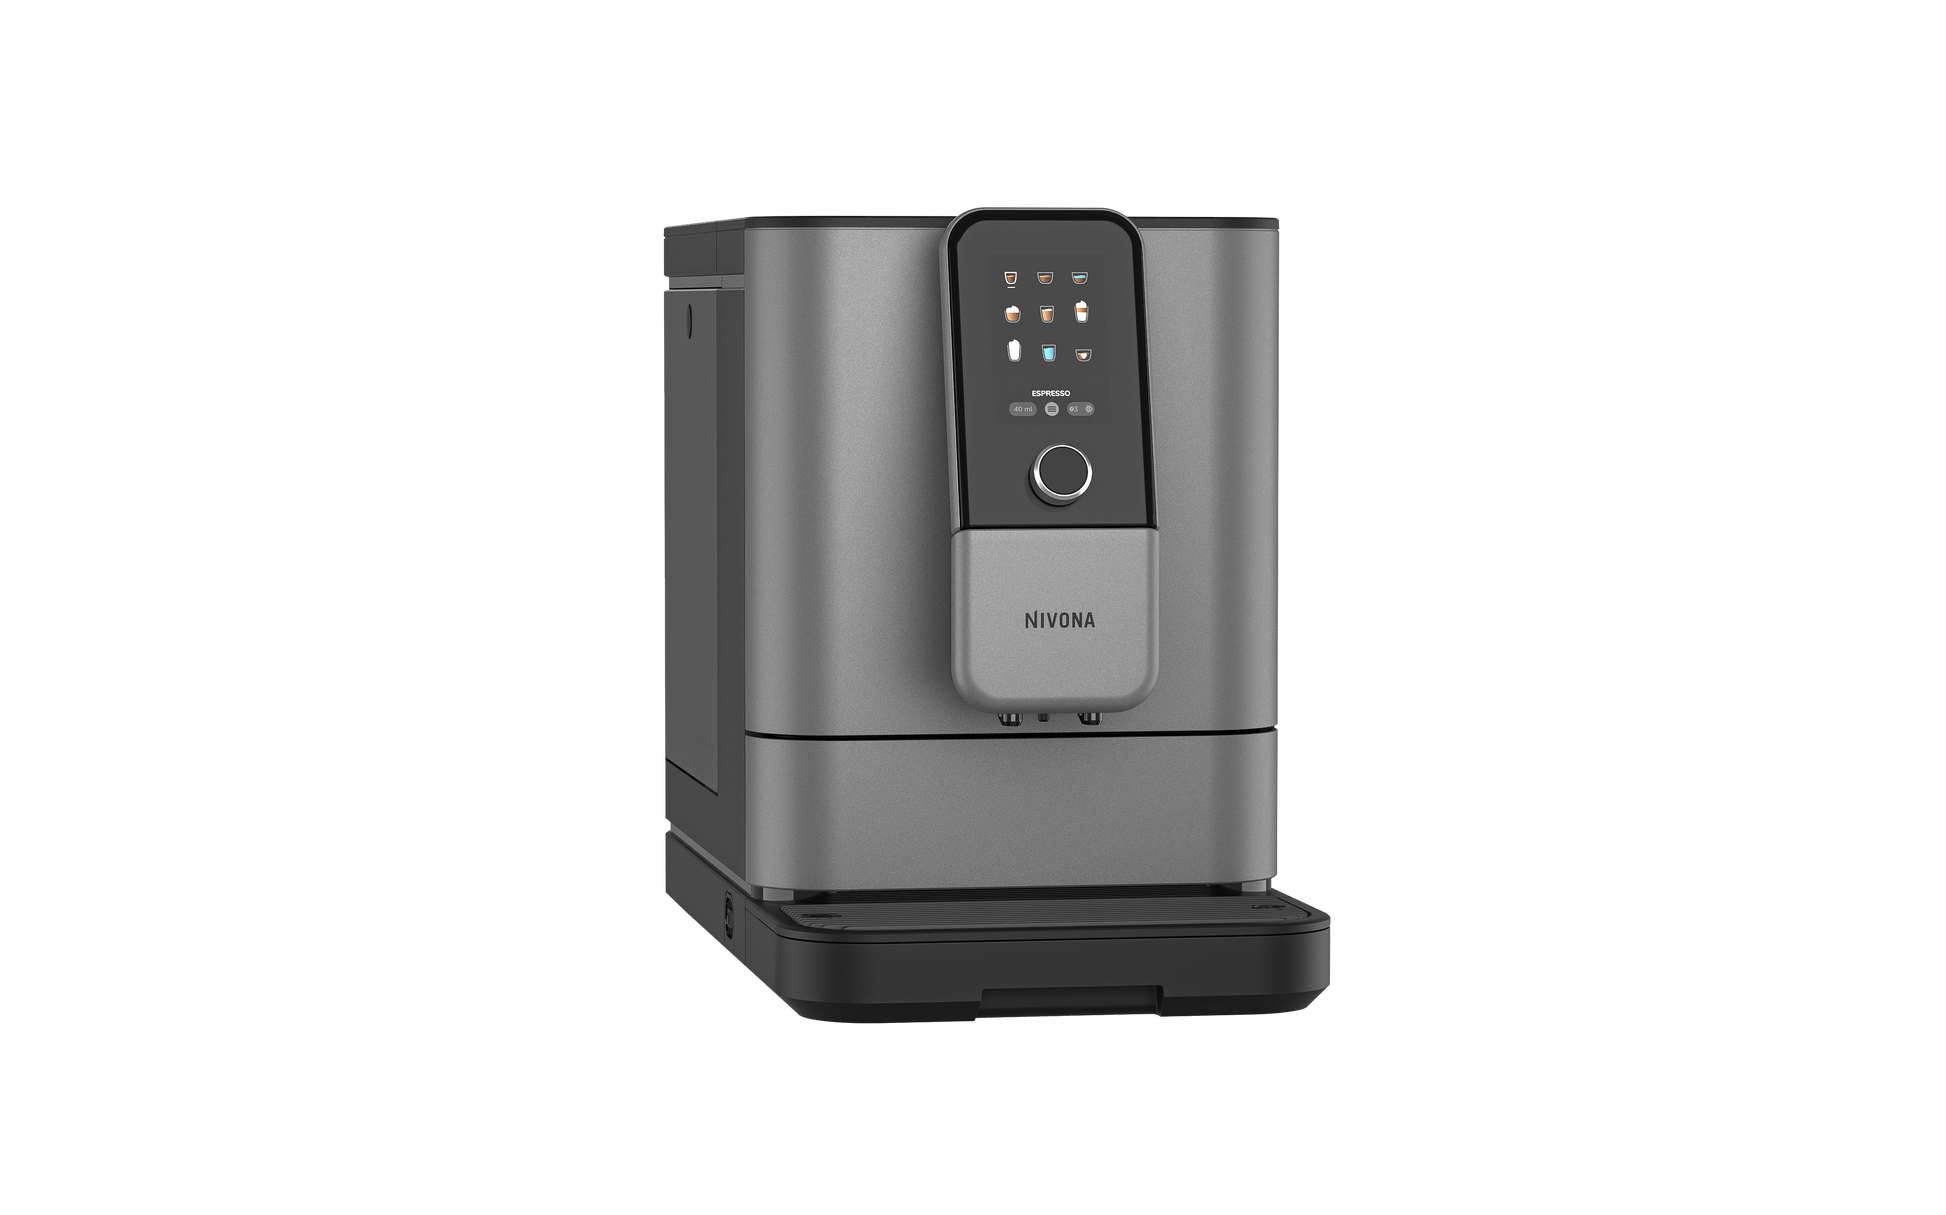 Nivona-NIVO 8103 Chrom-Kaffeevollautomaten-Beutelschmidt